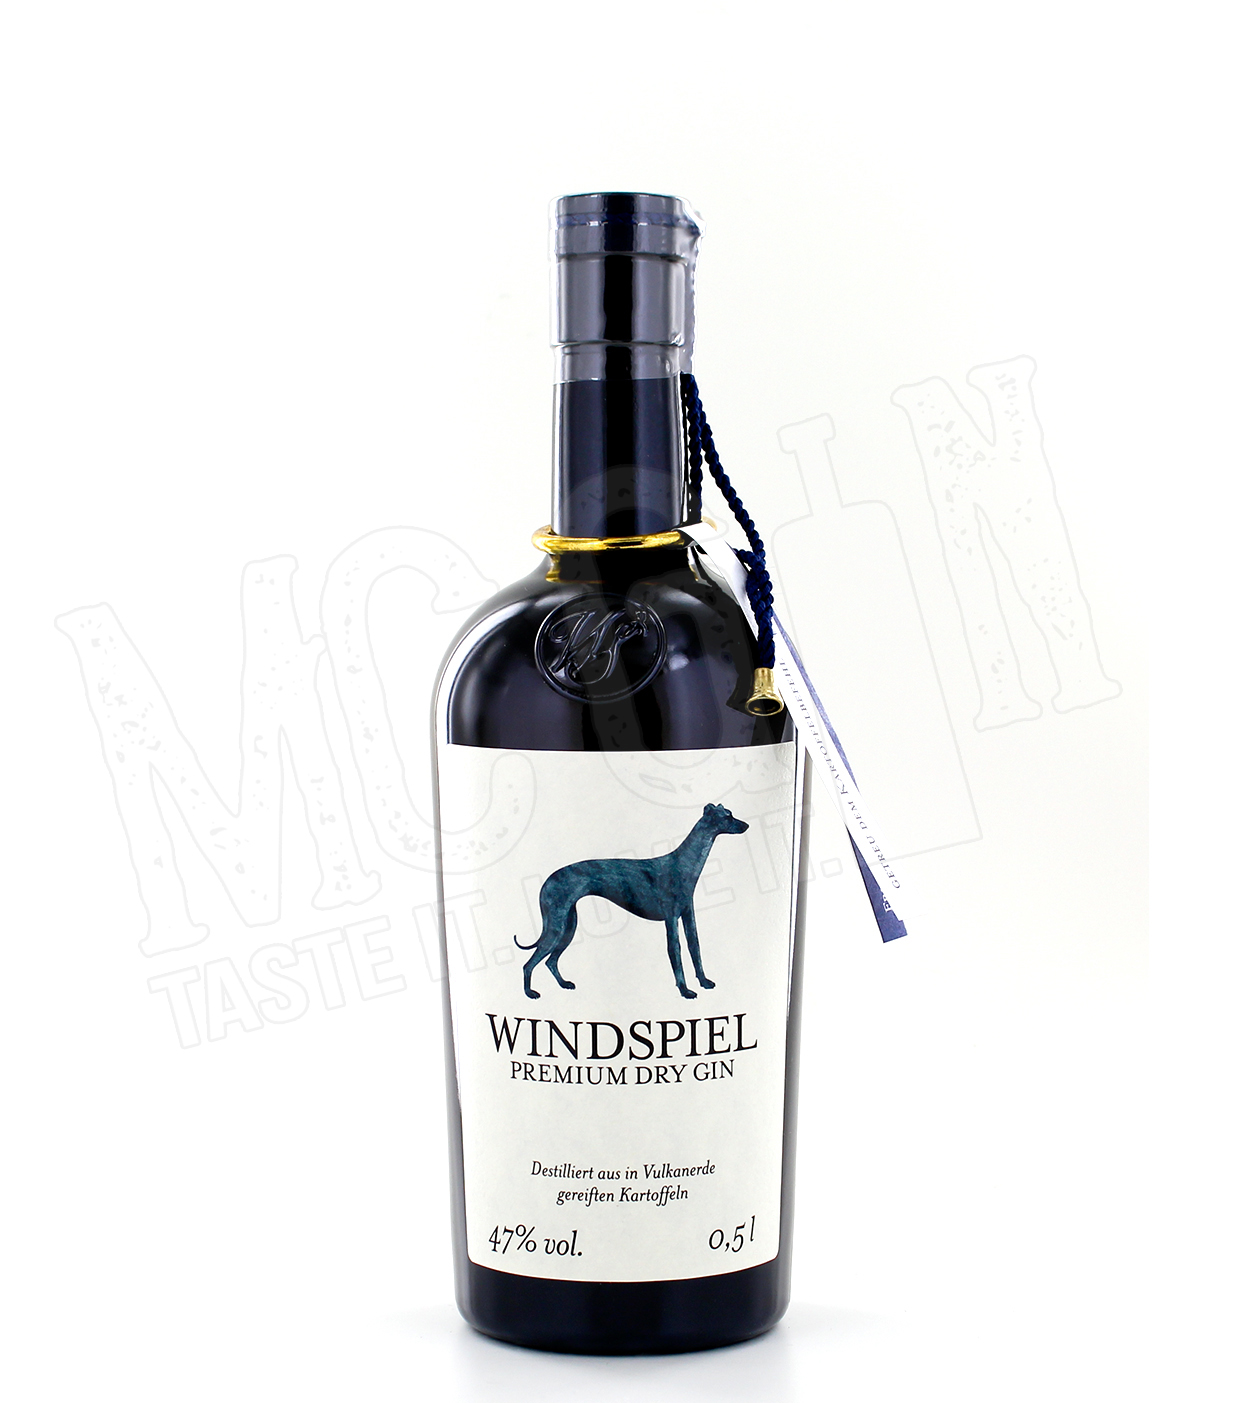 Windspiel Premium Dry Gin - 0.5L | Dry Gin | McGin.ch - Taste it, love it! | Gin